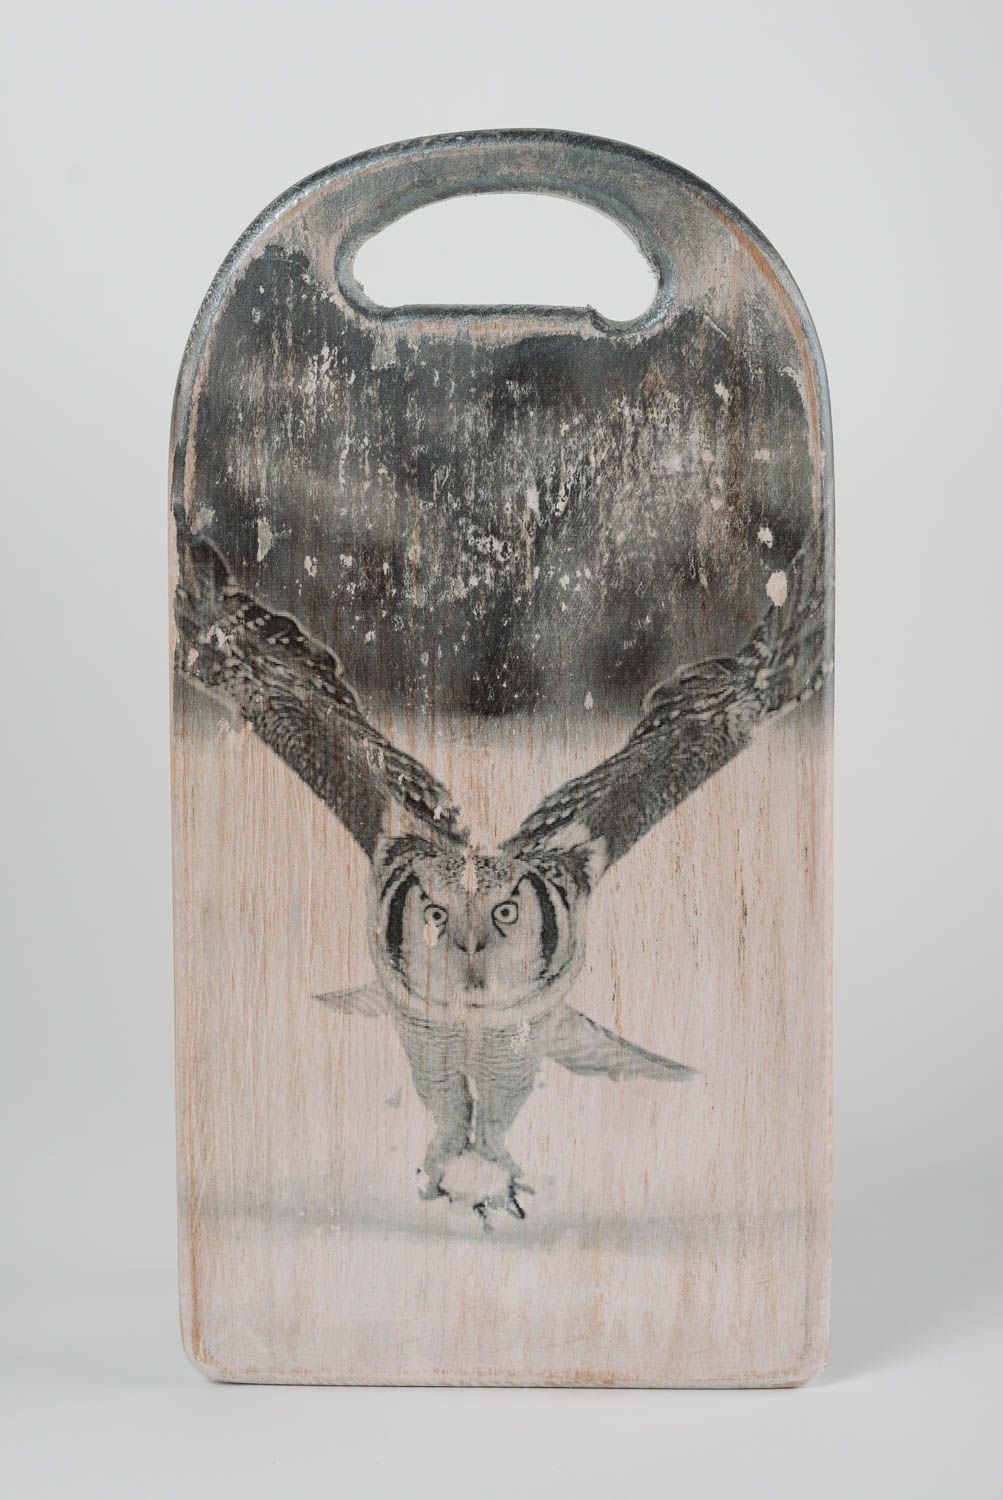 Unusual beautiful handmade decoupage wooden chopping board with owl image photo 1